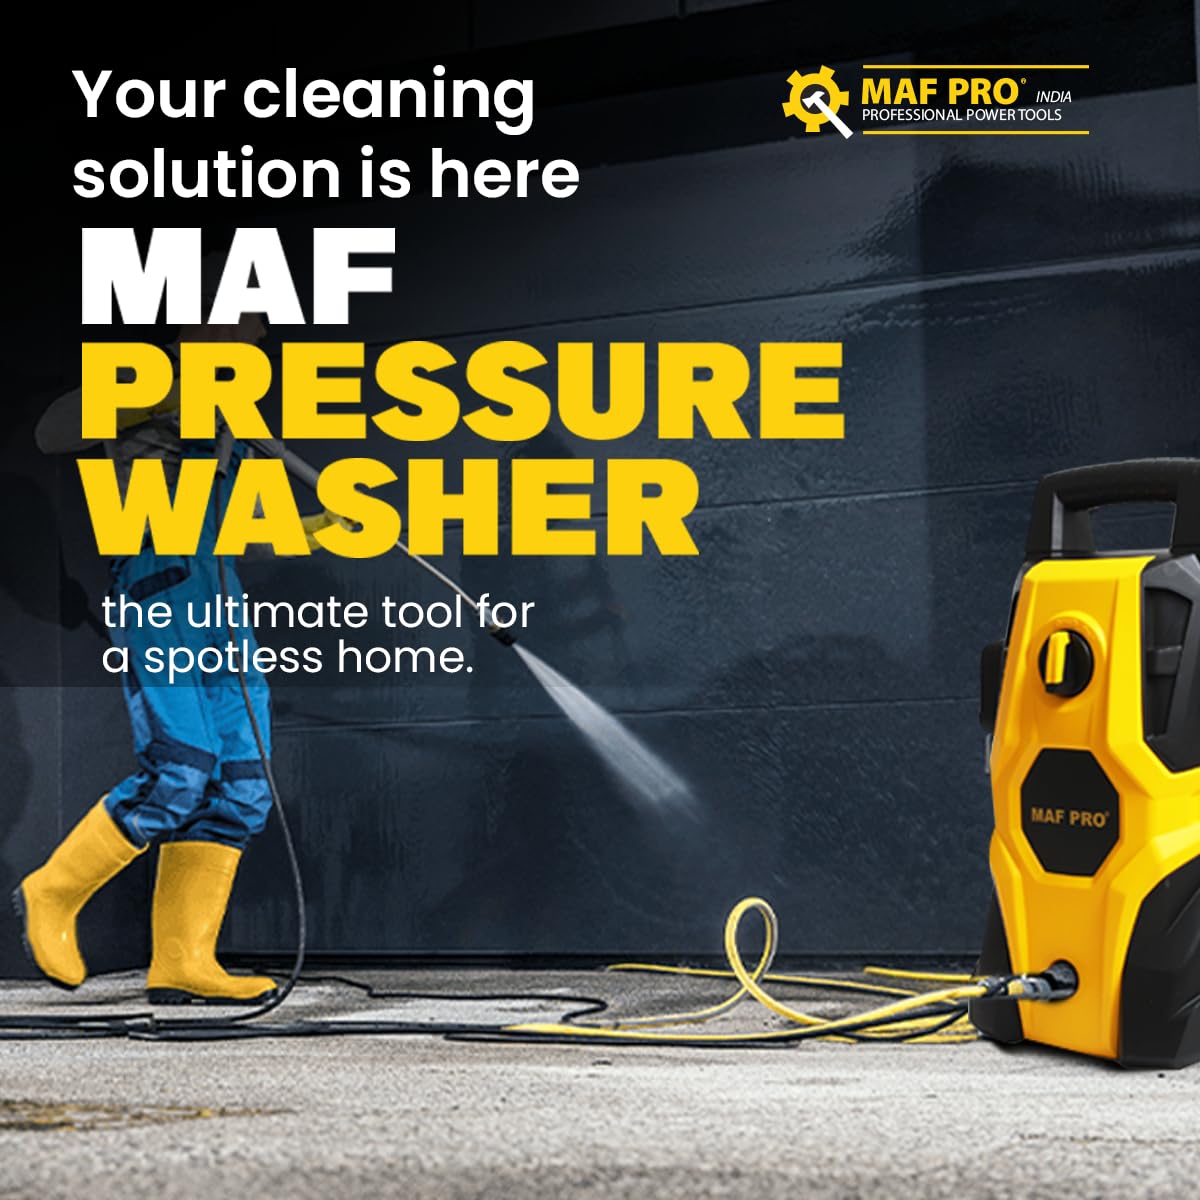 MAF PRO HPW14002 1400W Professional High Pressure Washer for Car Wash, Bike Wash & Home Cleaning (1400W, 105 Bar, 5.5LPM)